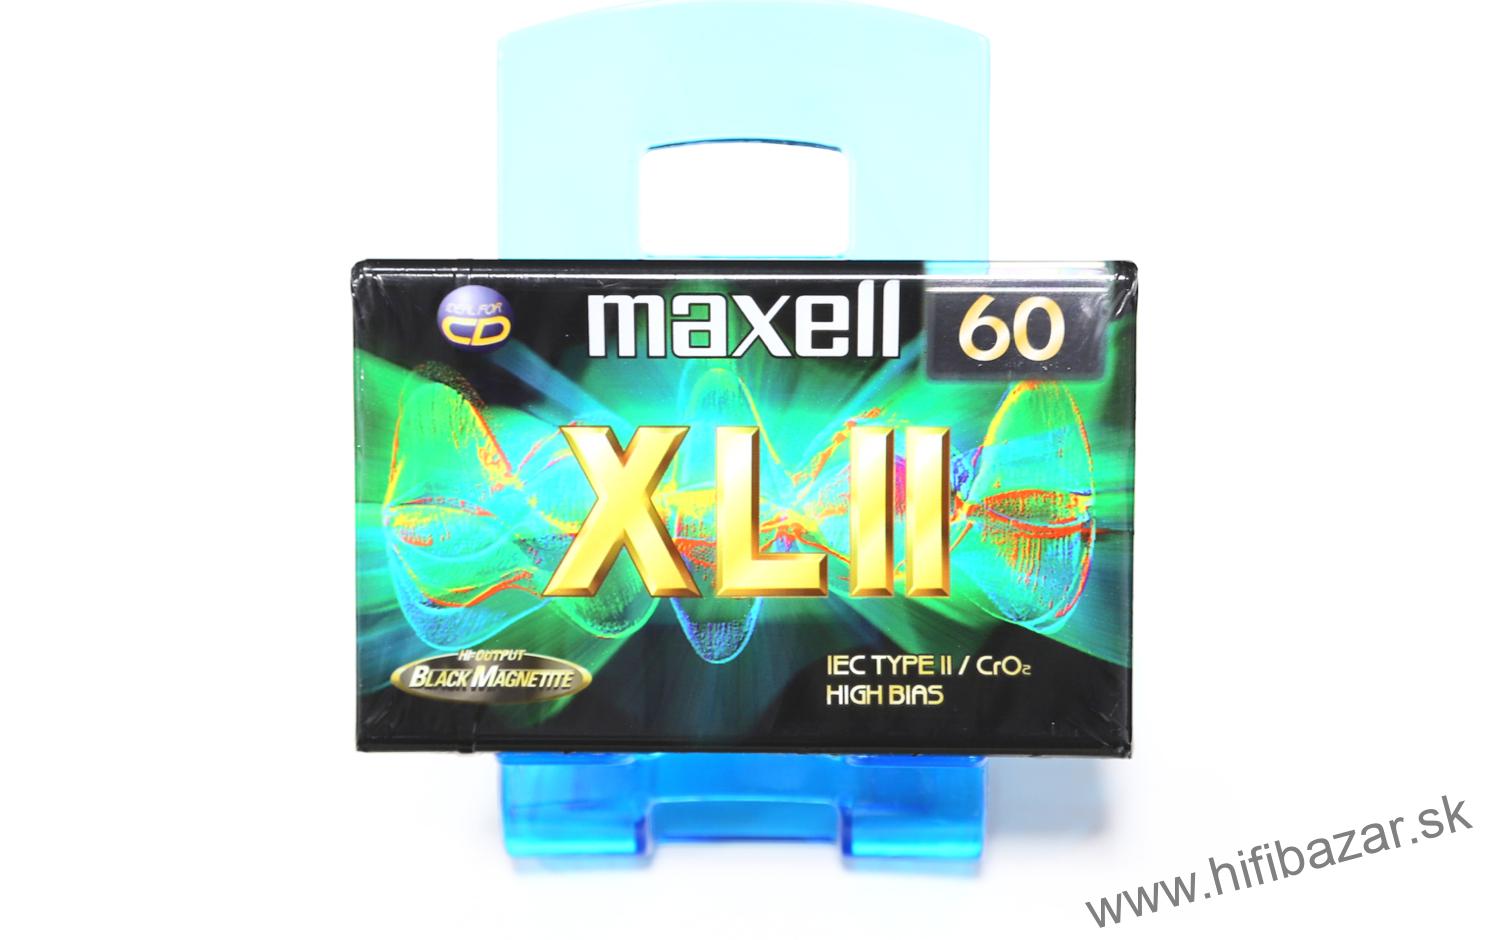 MAXELL XLII-60 Black Magnetite